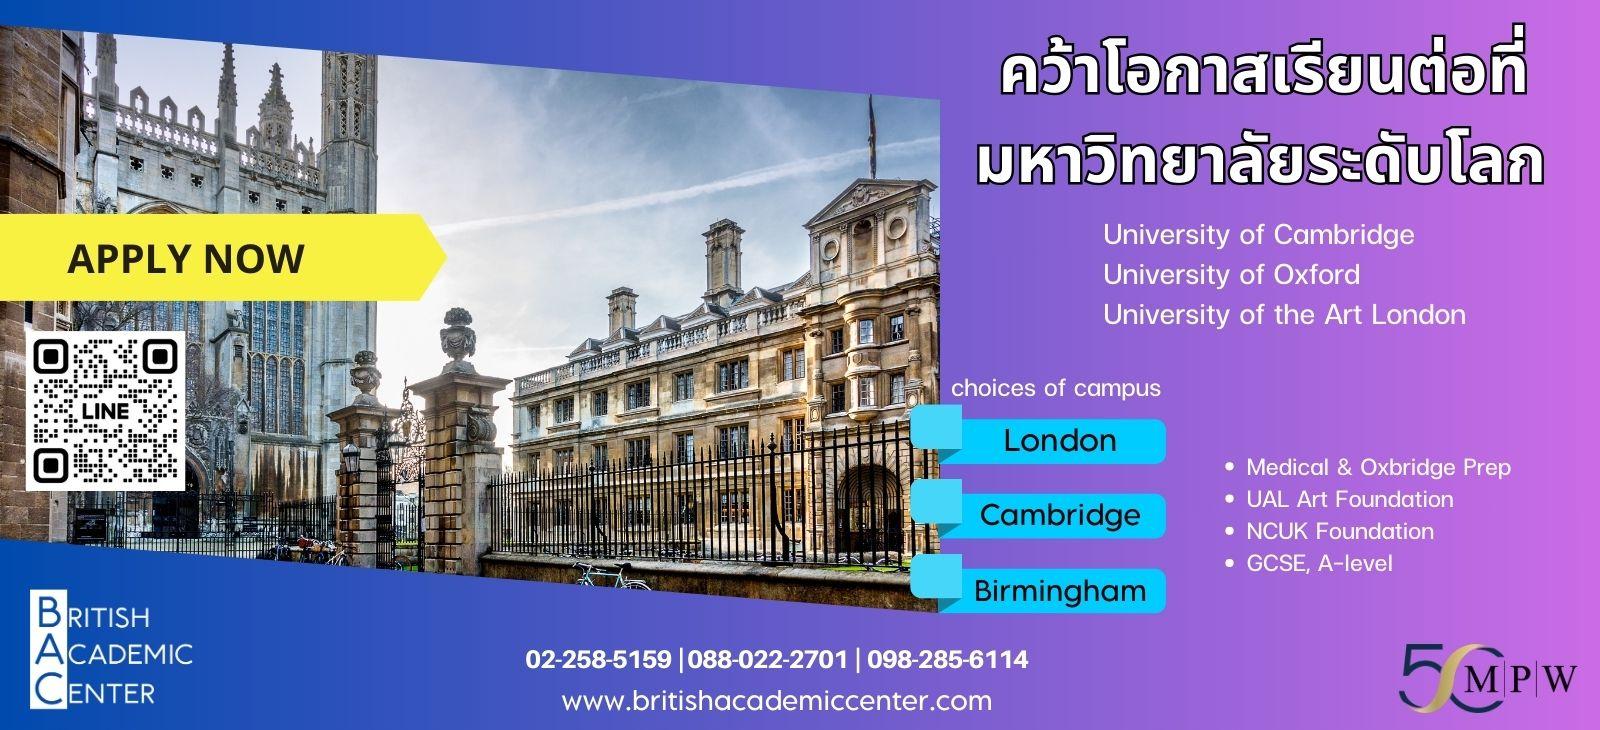 MPW College x British Academic Center: ปูทางสู่มหาวิทยาลัยชั้นนำในสหราชอาณาจักร UK